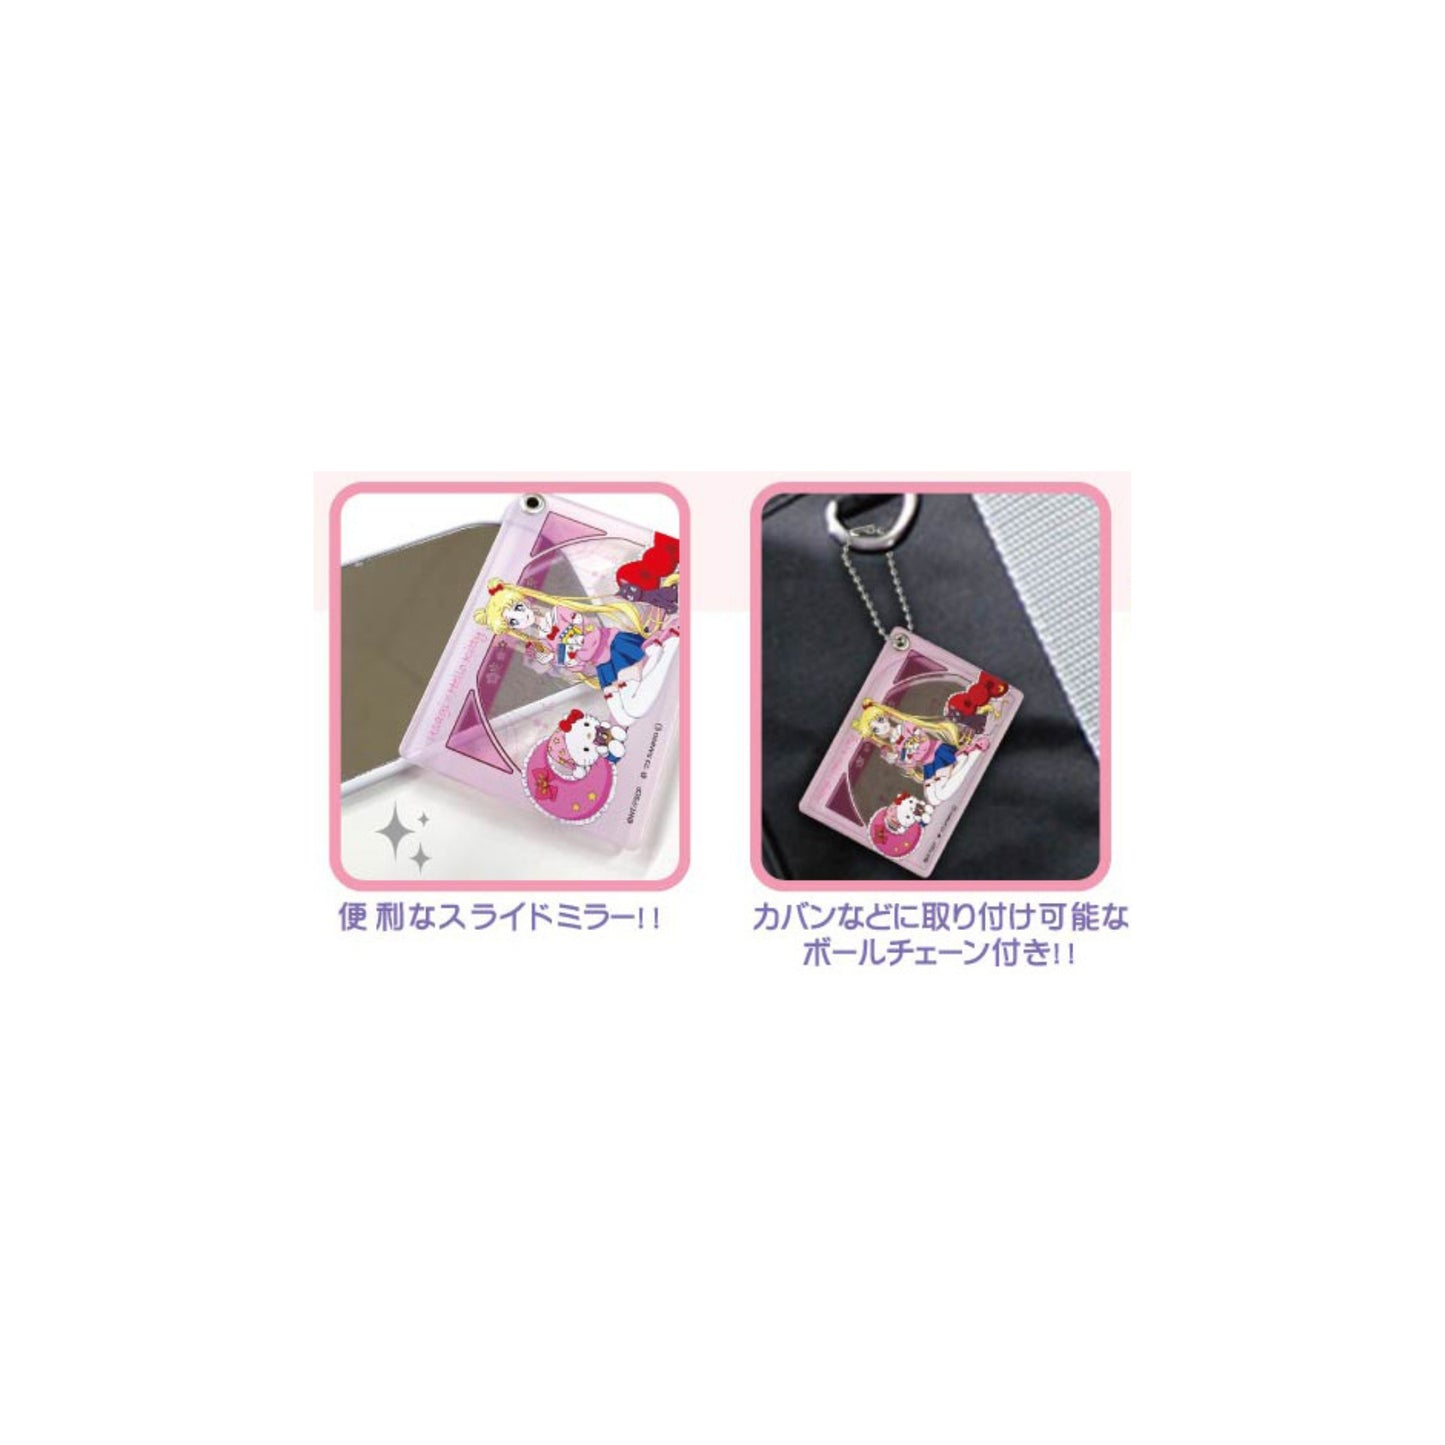 Sailor Moon x Sanrio Characters - Slide Mirror: Haruka x Little Twin Stars